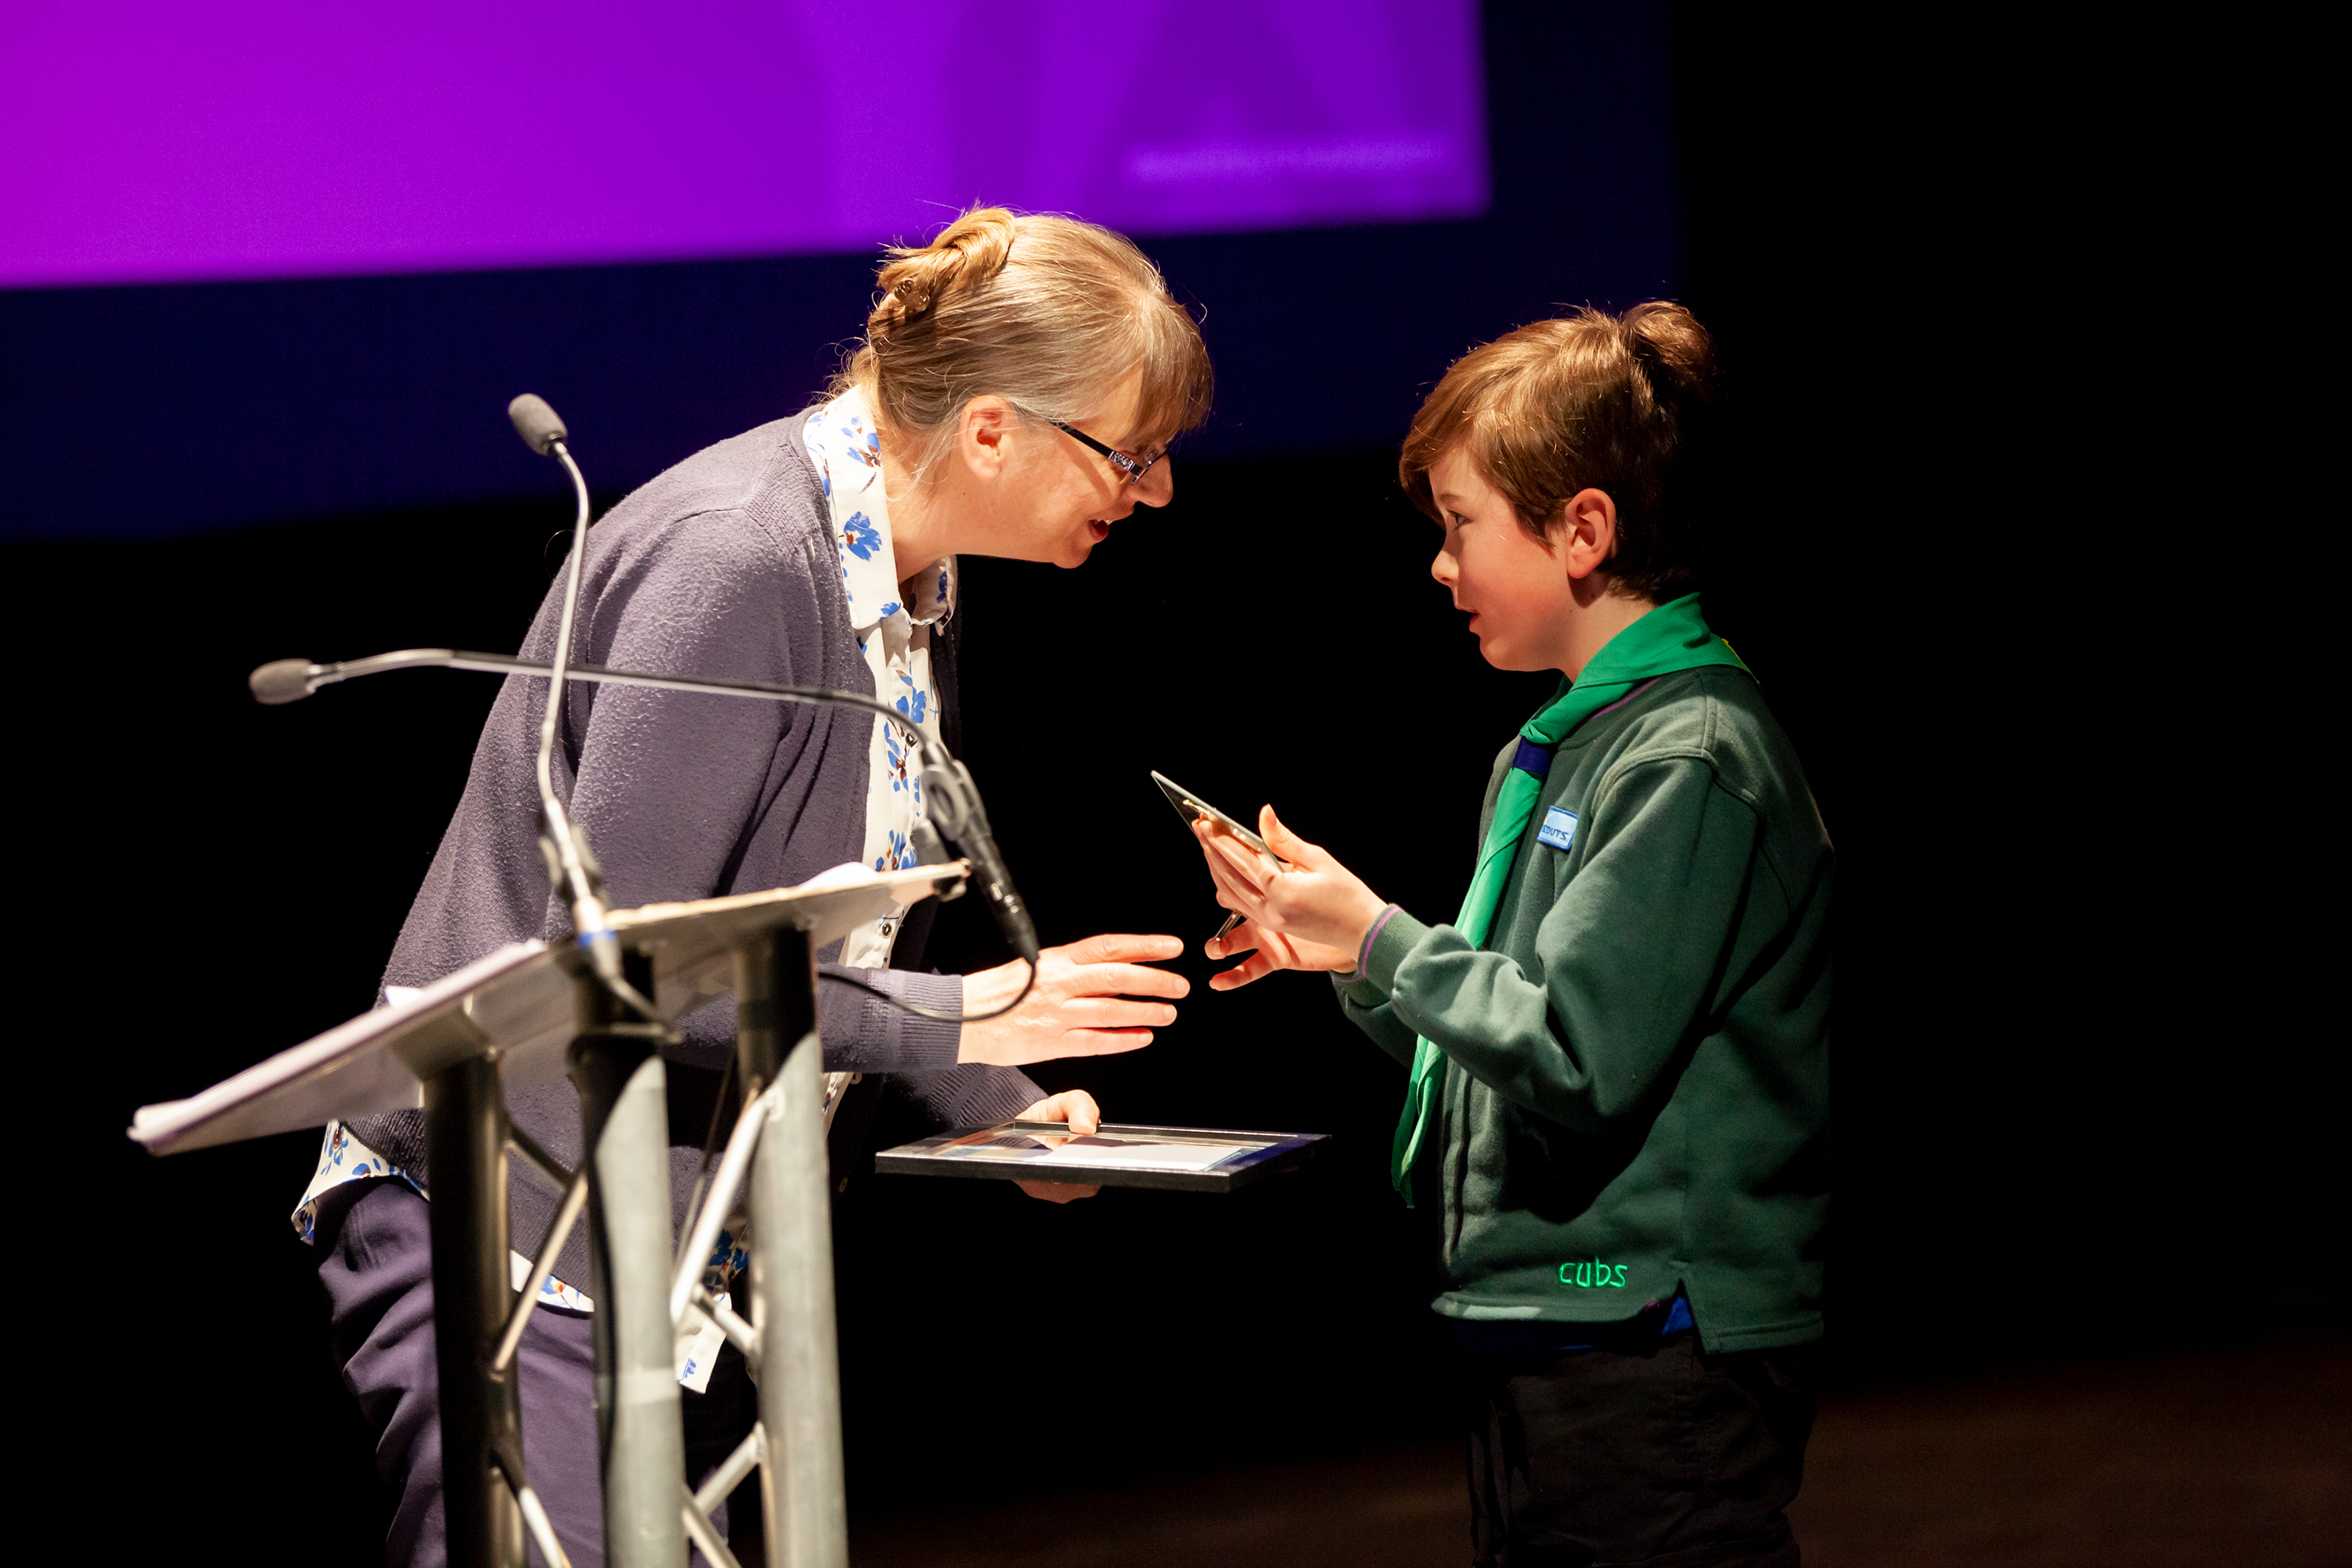 Boy receives award on stage